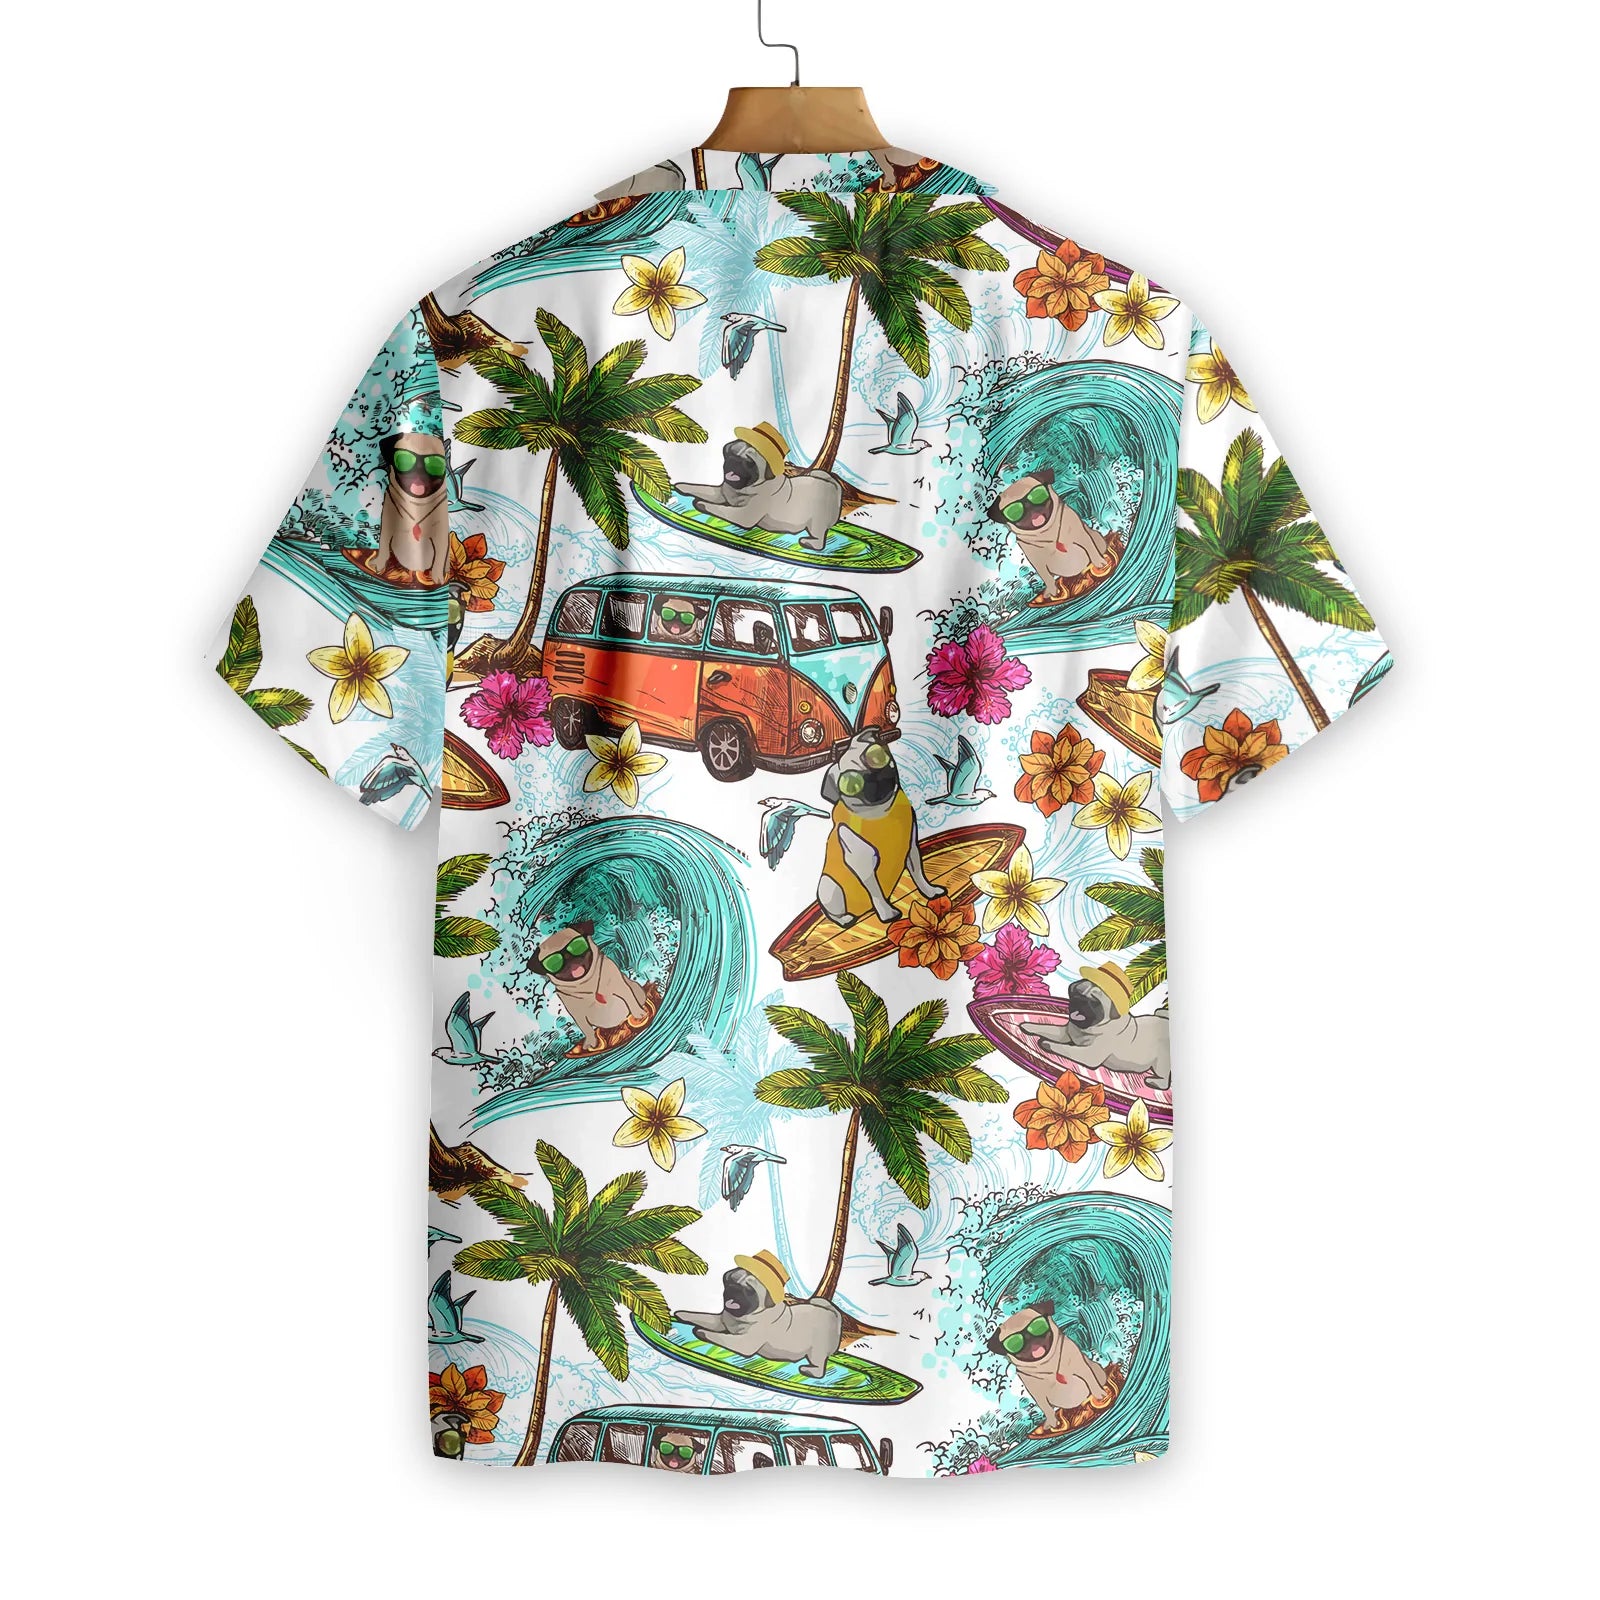 Beach Pugs Hawaiian Shirt, Pugs Surfing On Beach, Tropical Summer Aloha Shirt For Men And Women- Perfect Gift For Pug Lovers, Friends, Husband, Boyfriend, Family